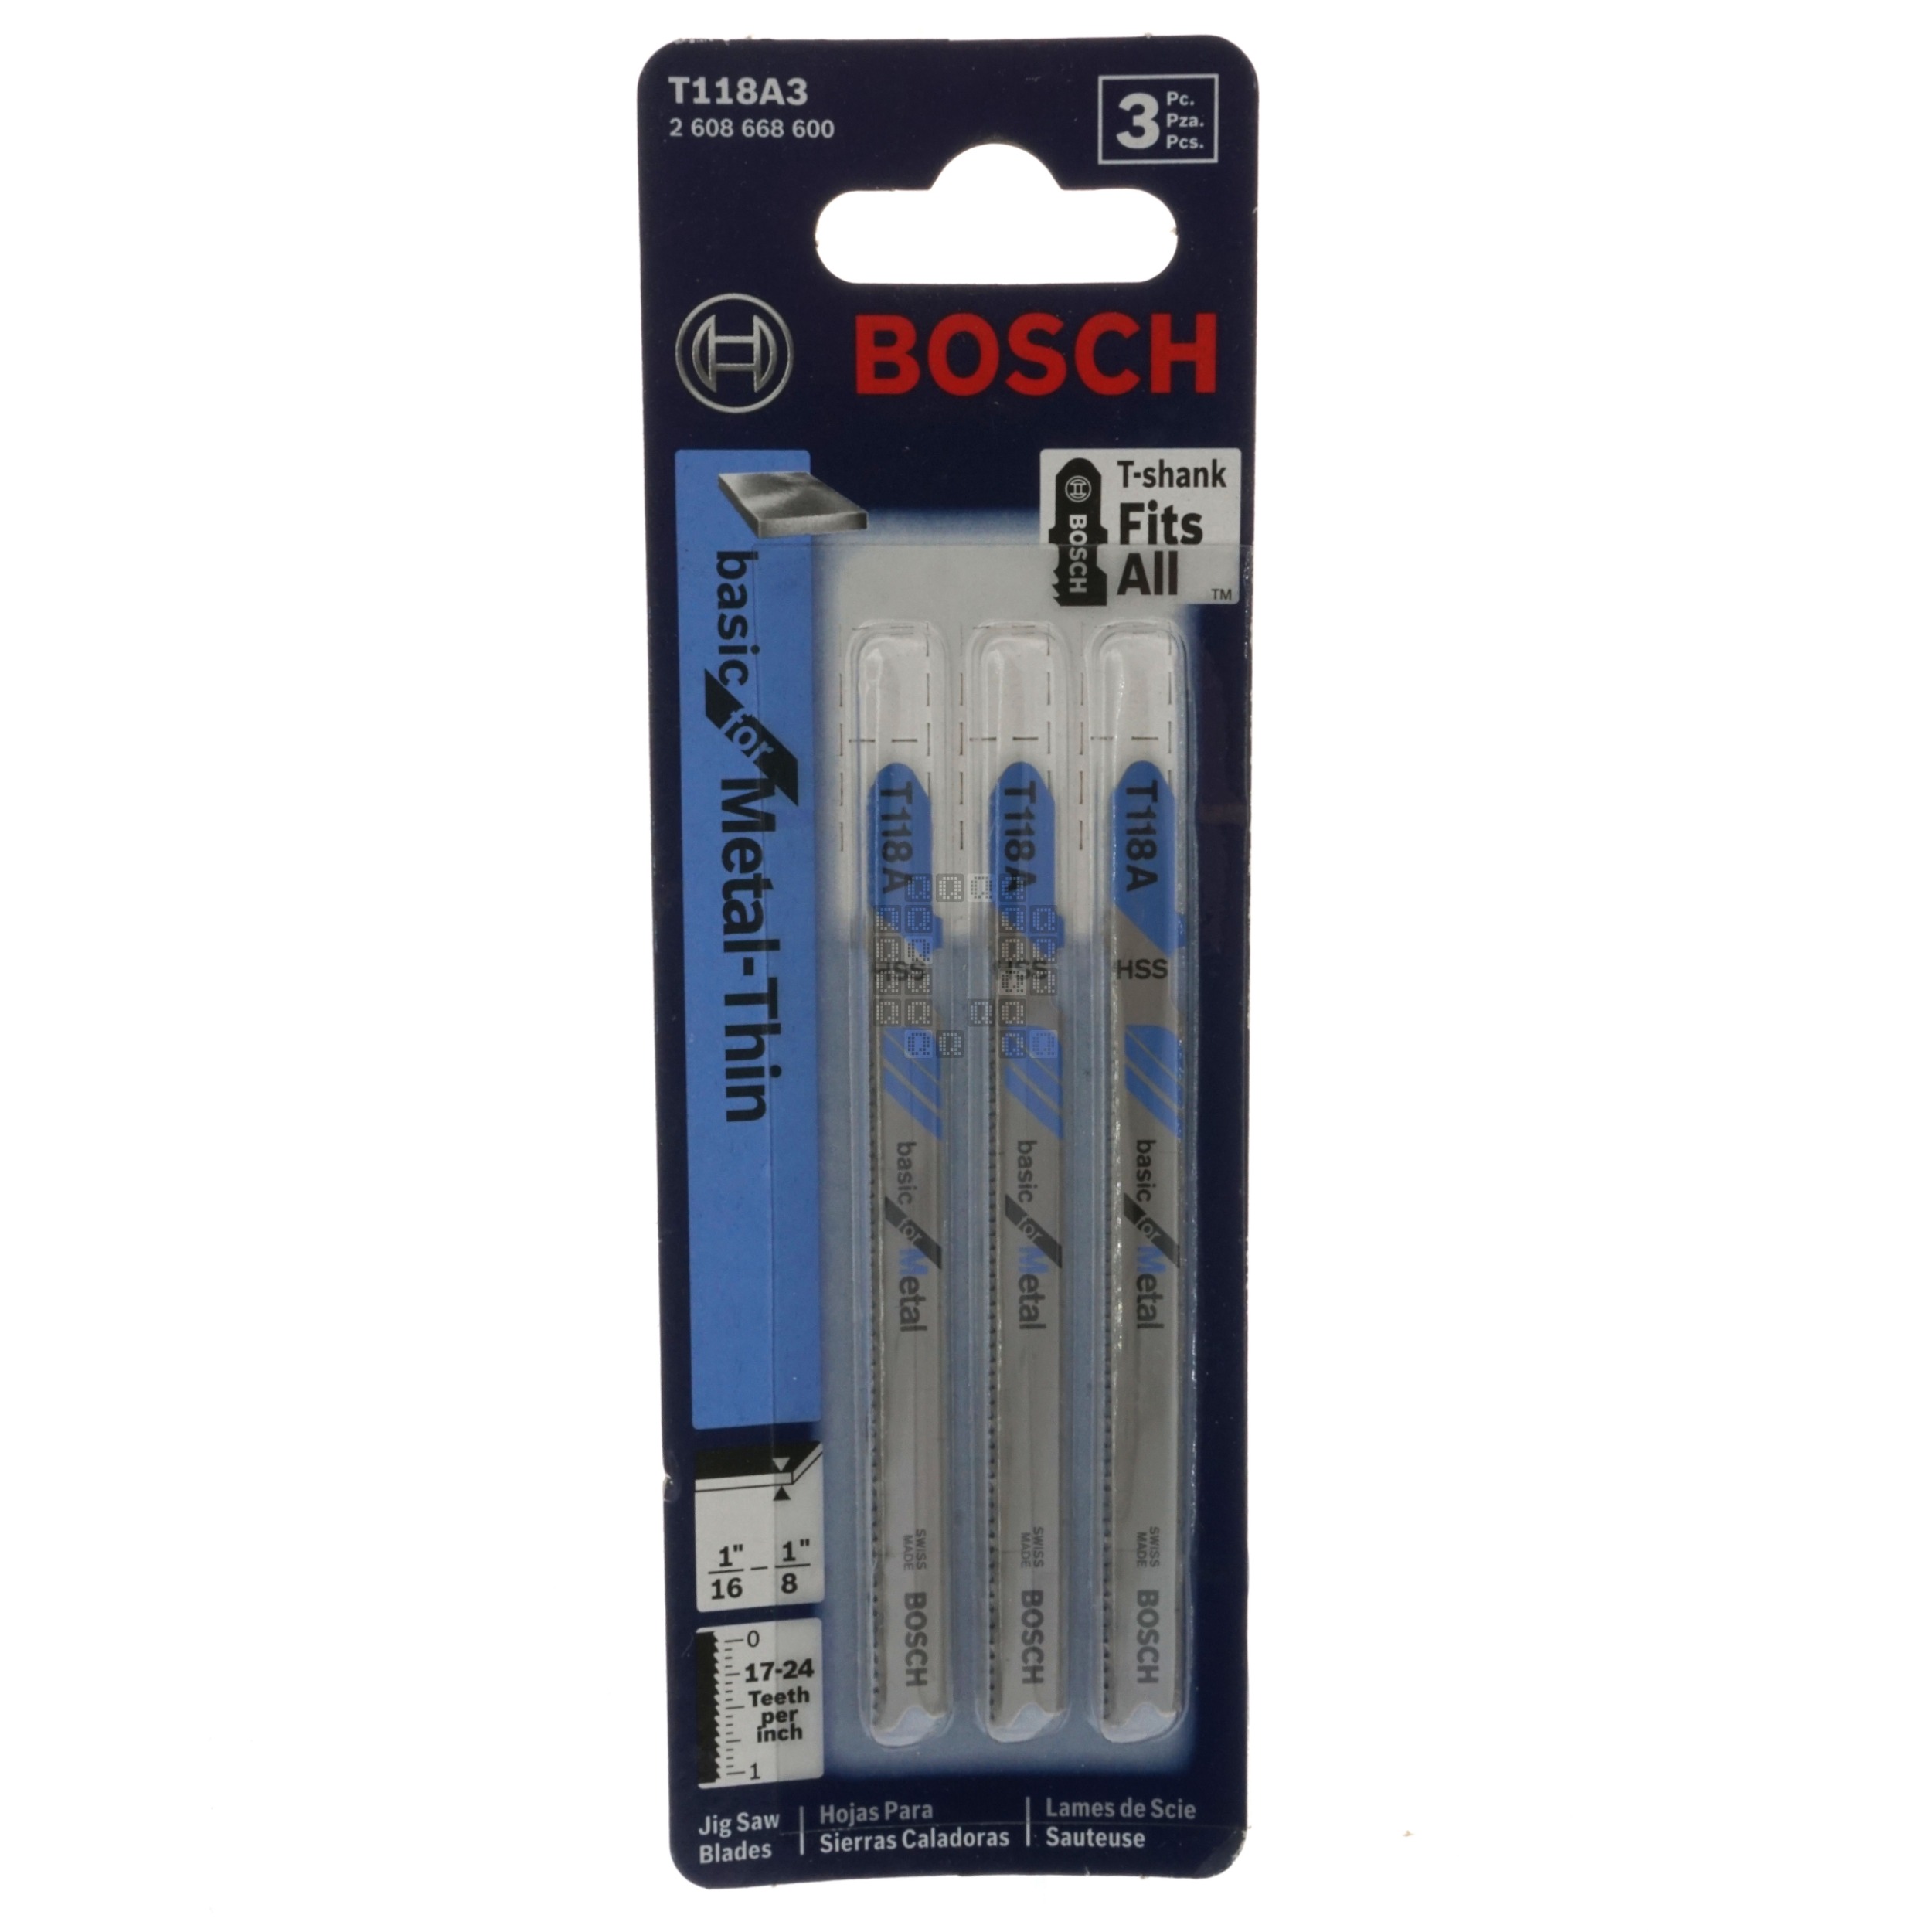 Bosch 2608668600 T118A3 T-Shank Jig Saw Blades, 17-24TPI, 3-5/8" Length, 3-Pack